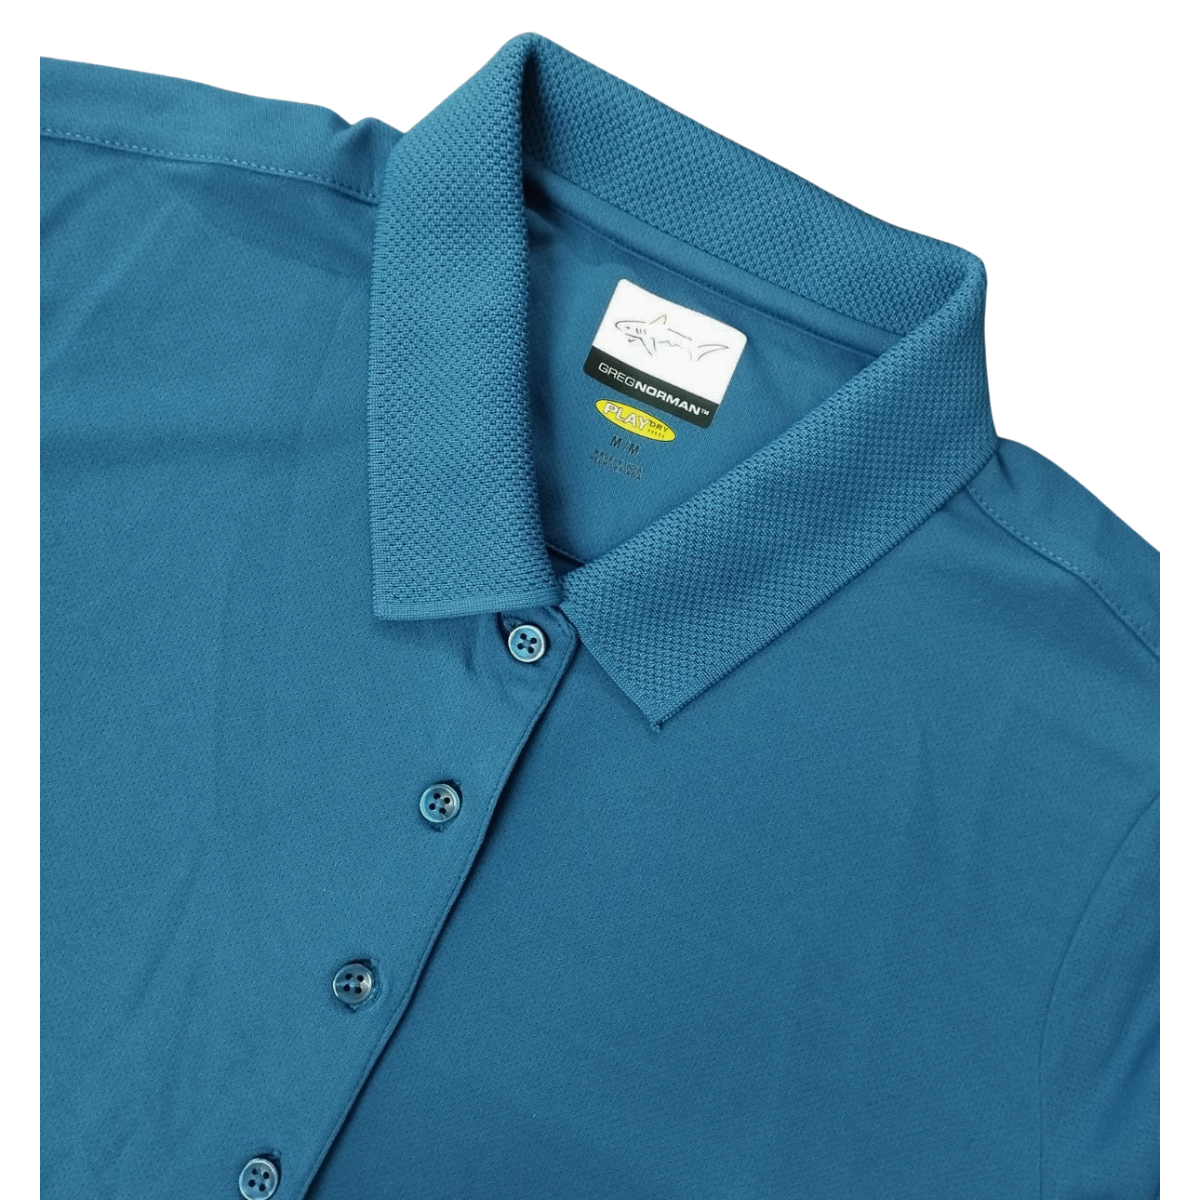 Greg Norman Women's Polo Tshirt (US Size)